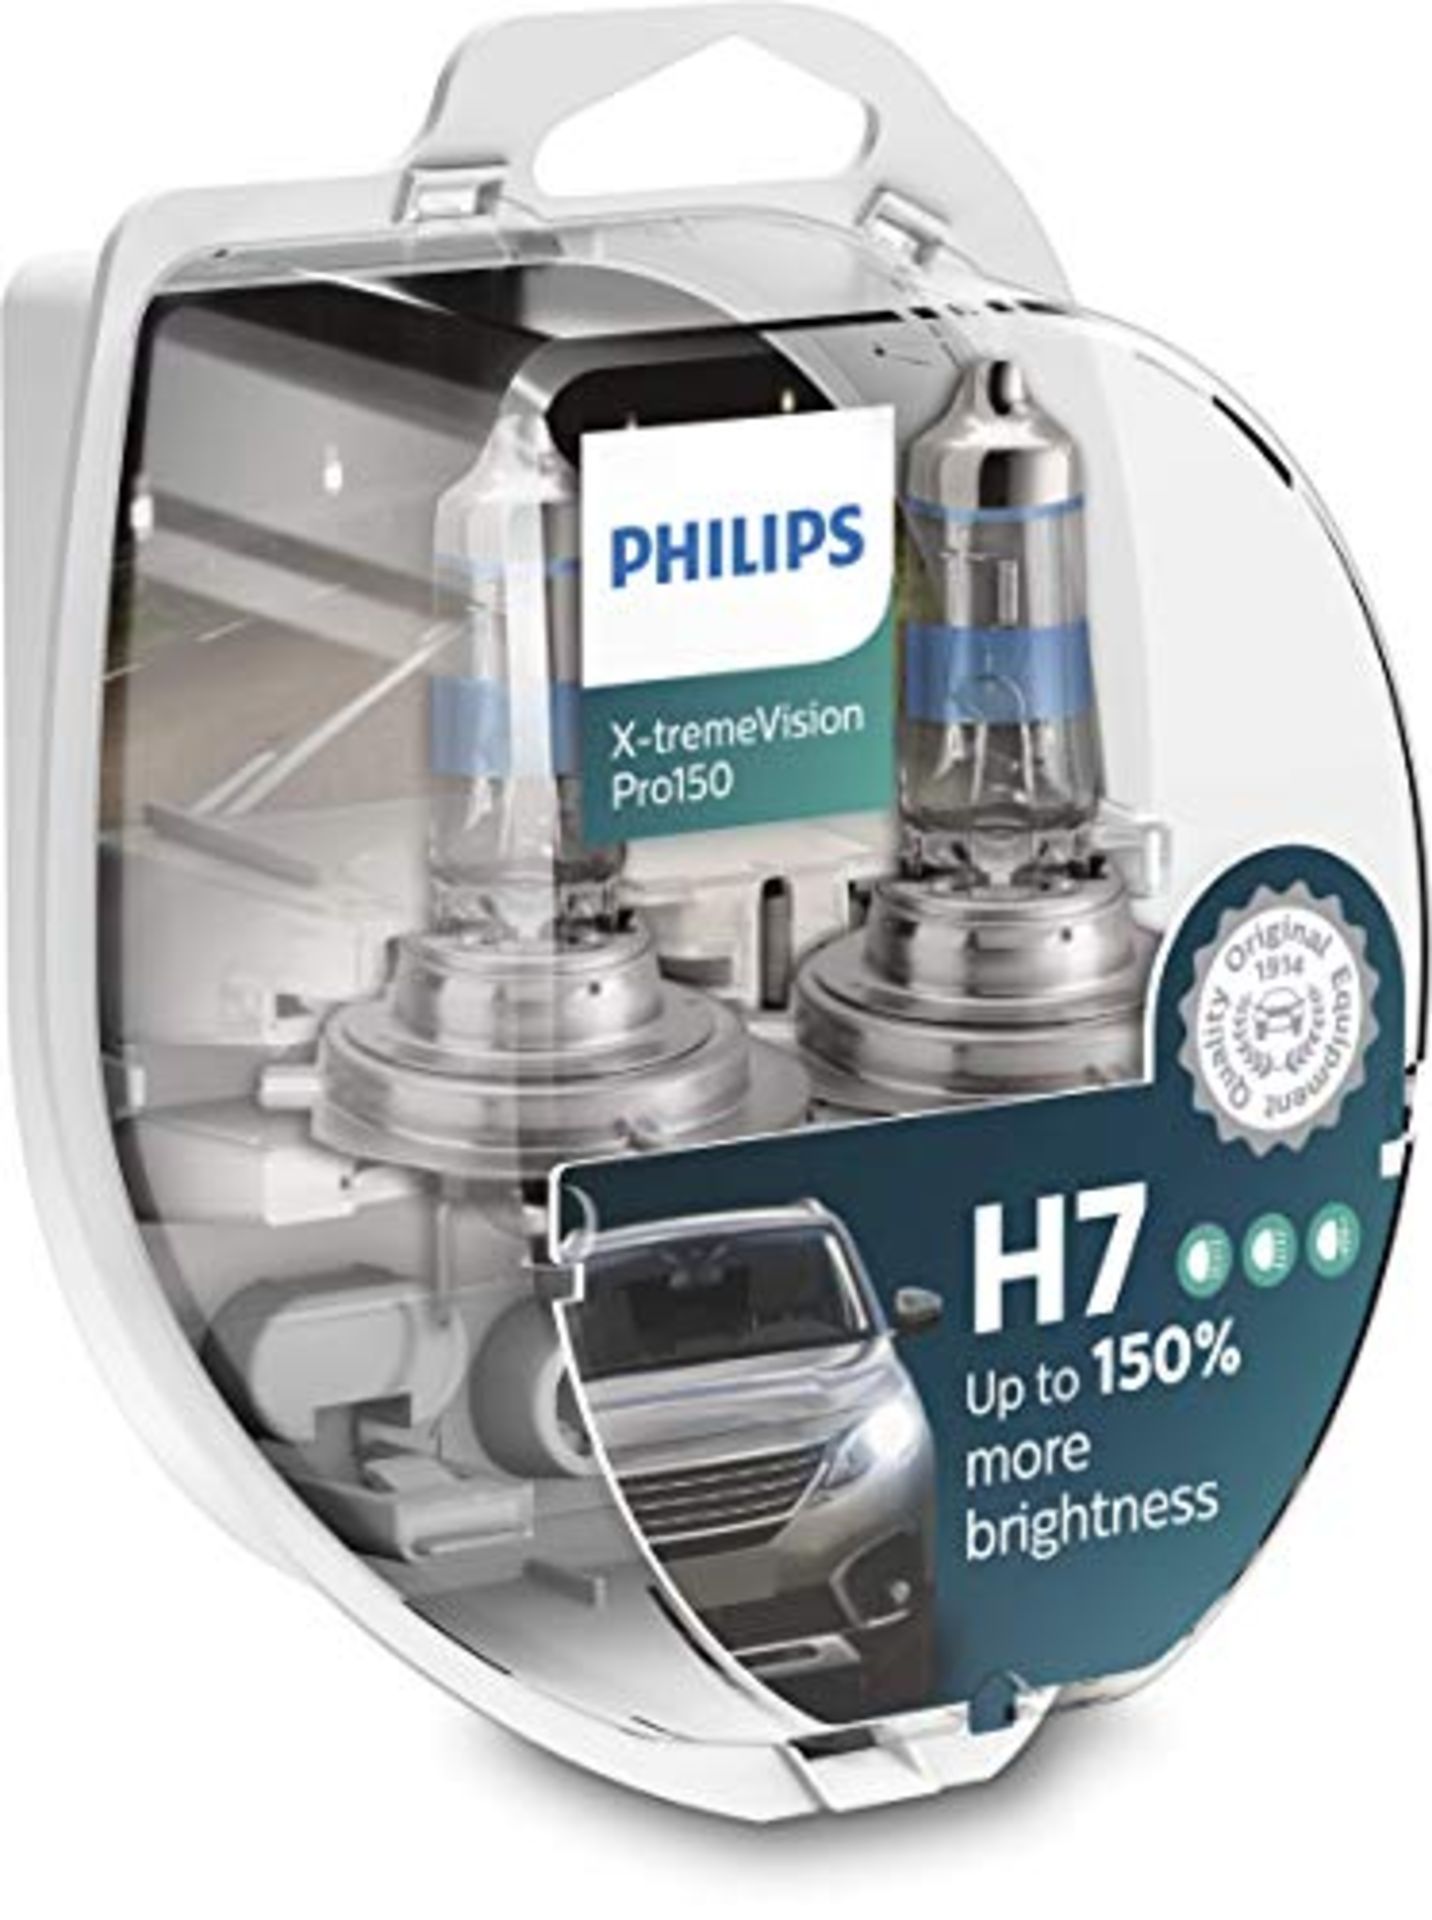 Philips X-tremeVision Pro150 H7 car headlight bulb +150%, set of 2